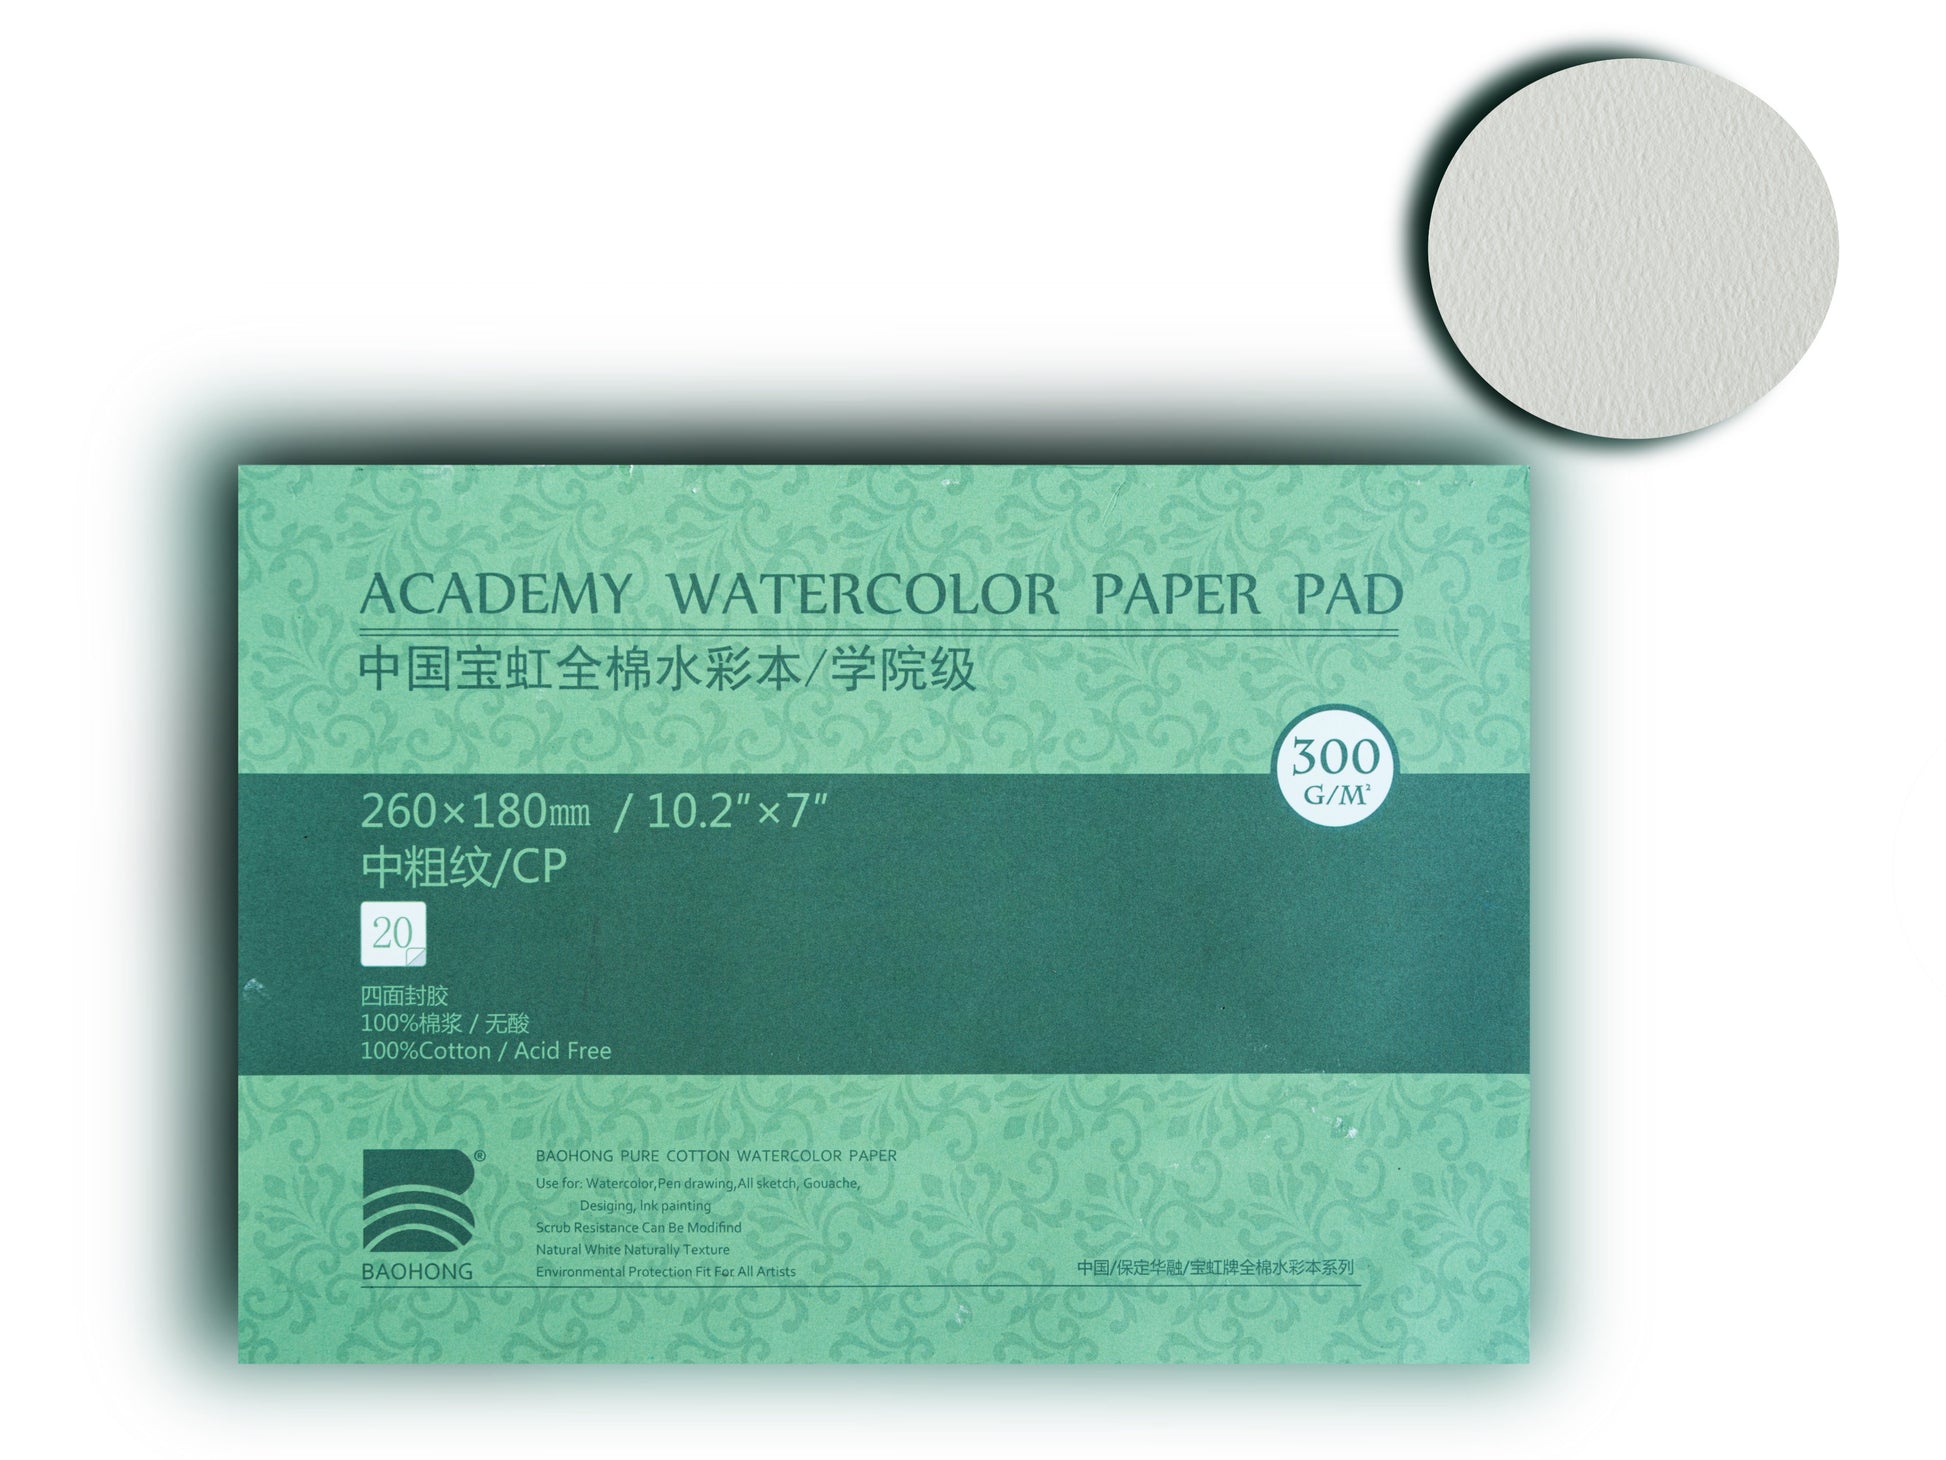 Baohong Watercolor Paper Pad 200g Academy Cotton 100% Color Lead Sketch  Four Side Sealing Glue 20 Sheets 16k 19cm*27cm